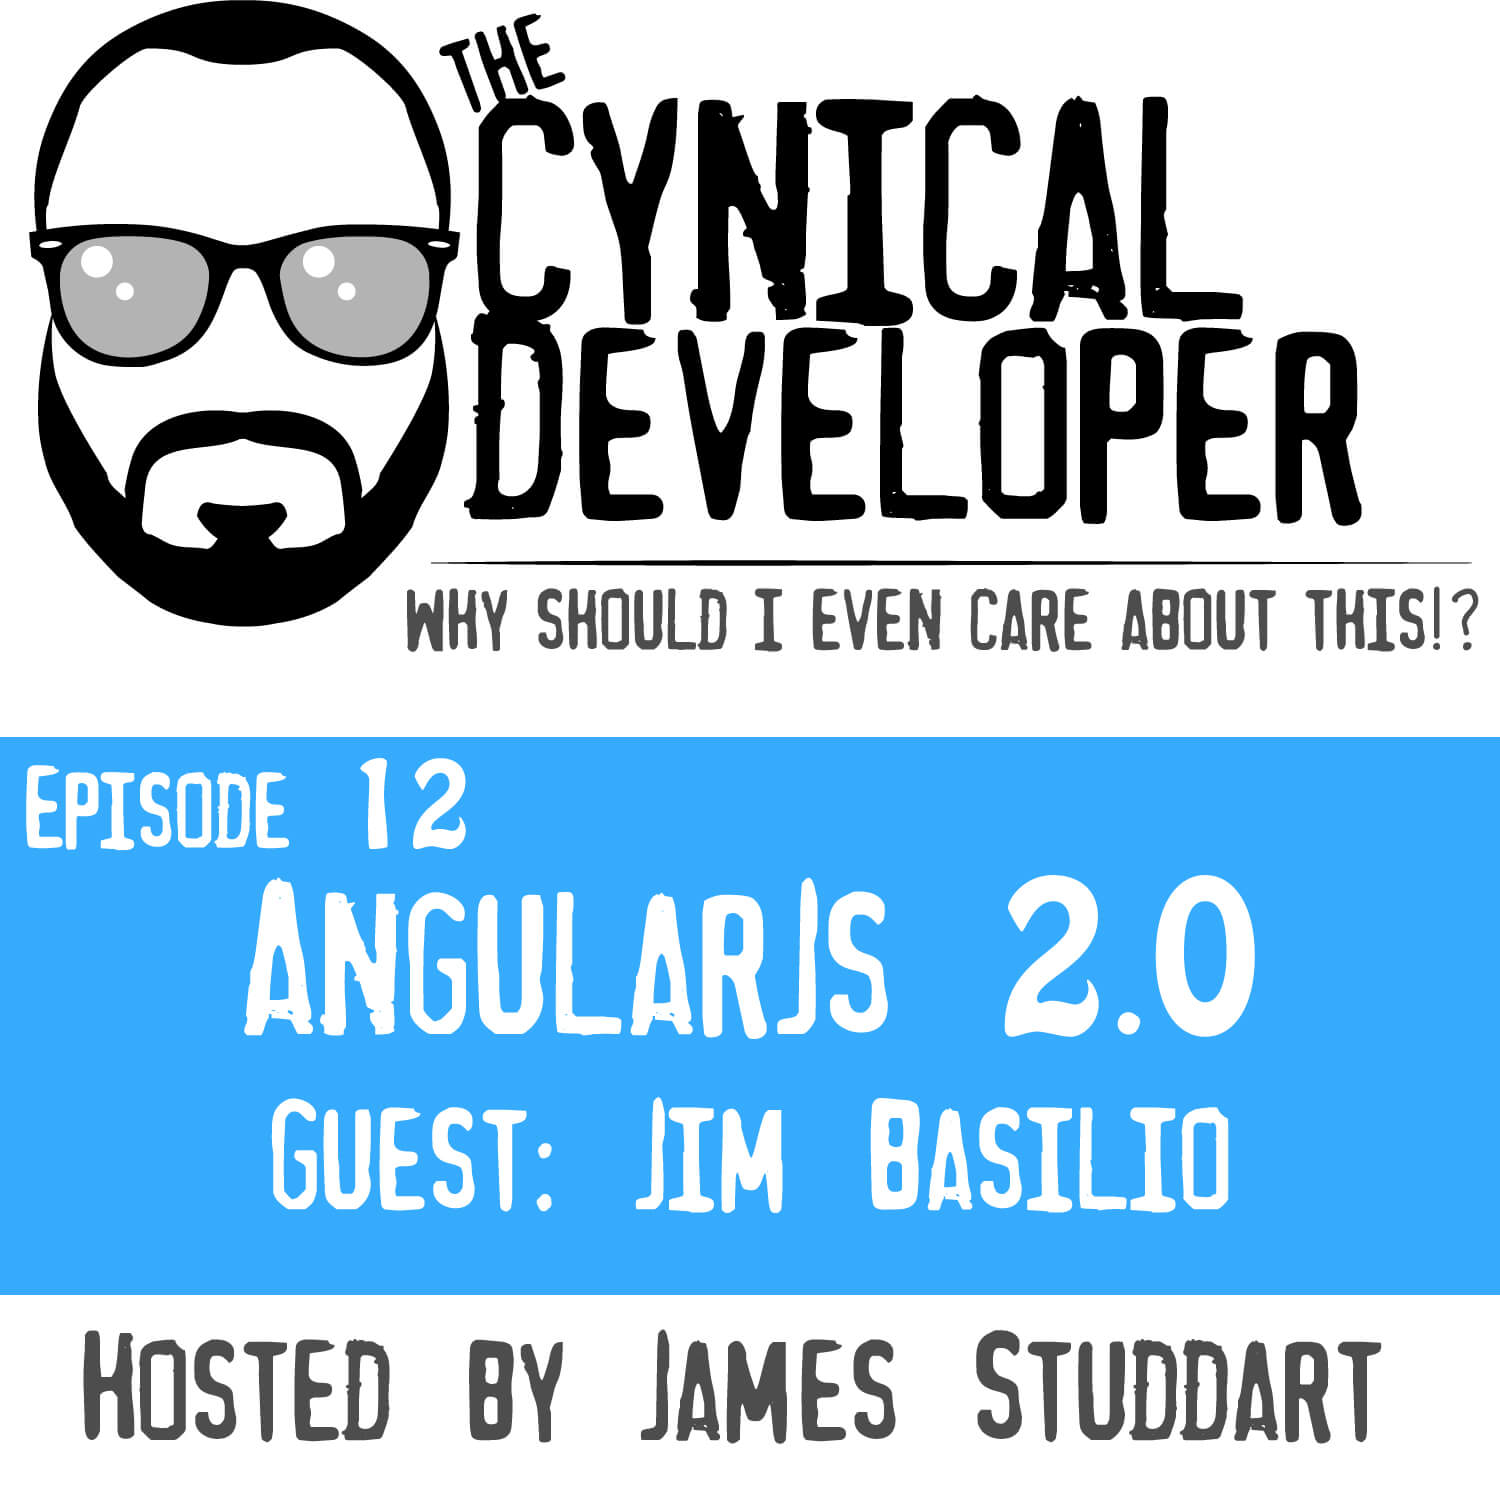 Episode 12 - AngularJs 2.0